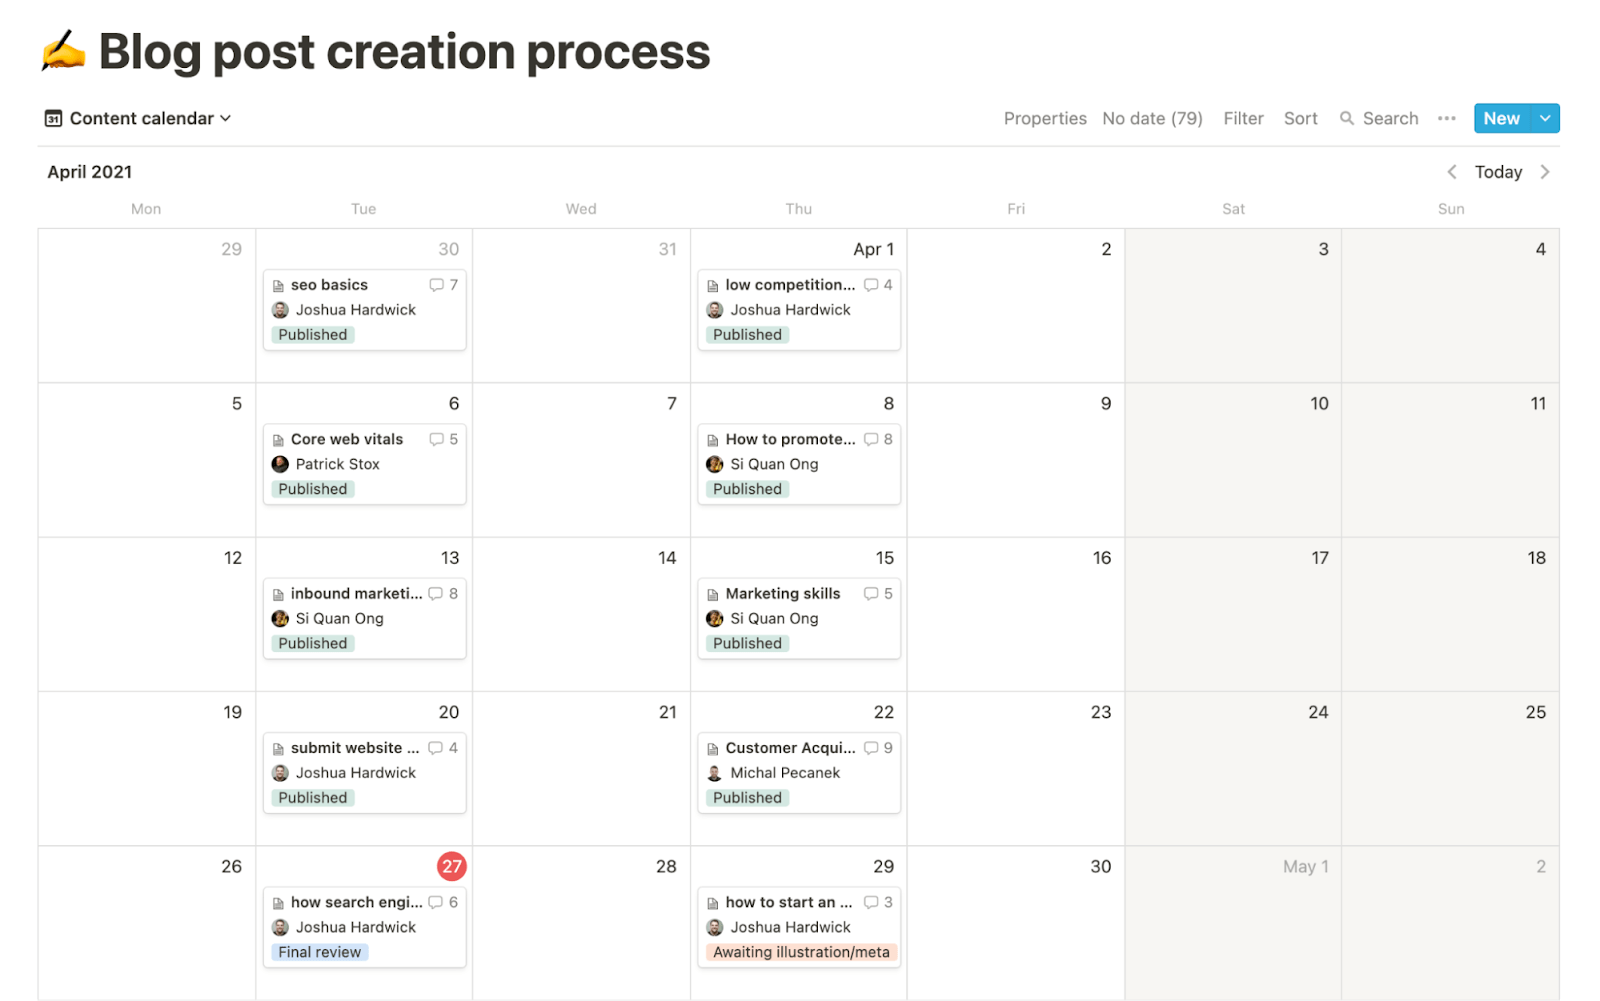 Content calendar example
